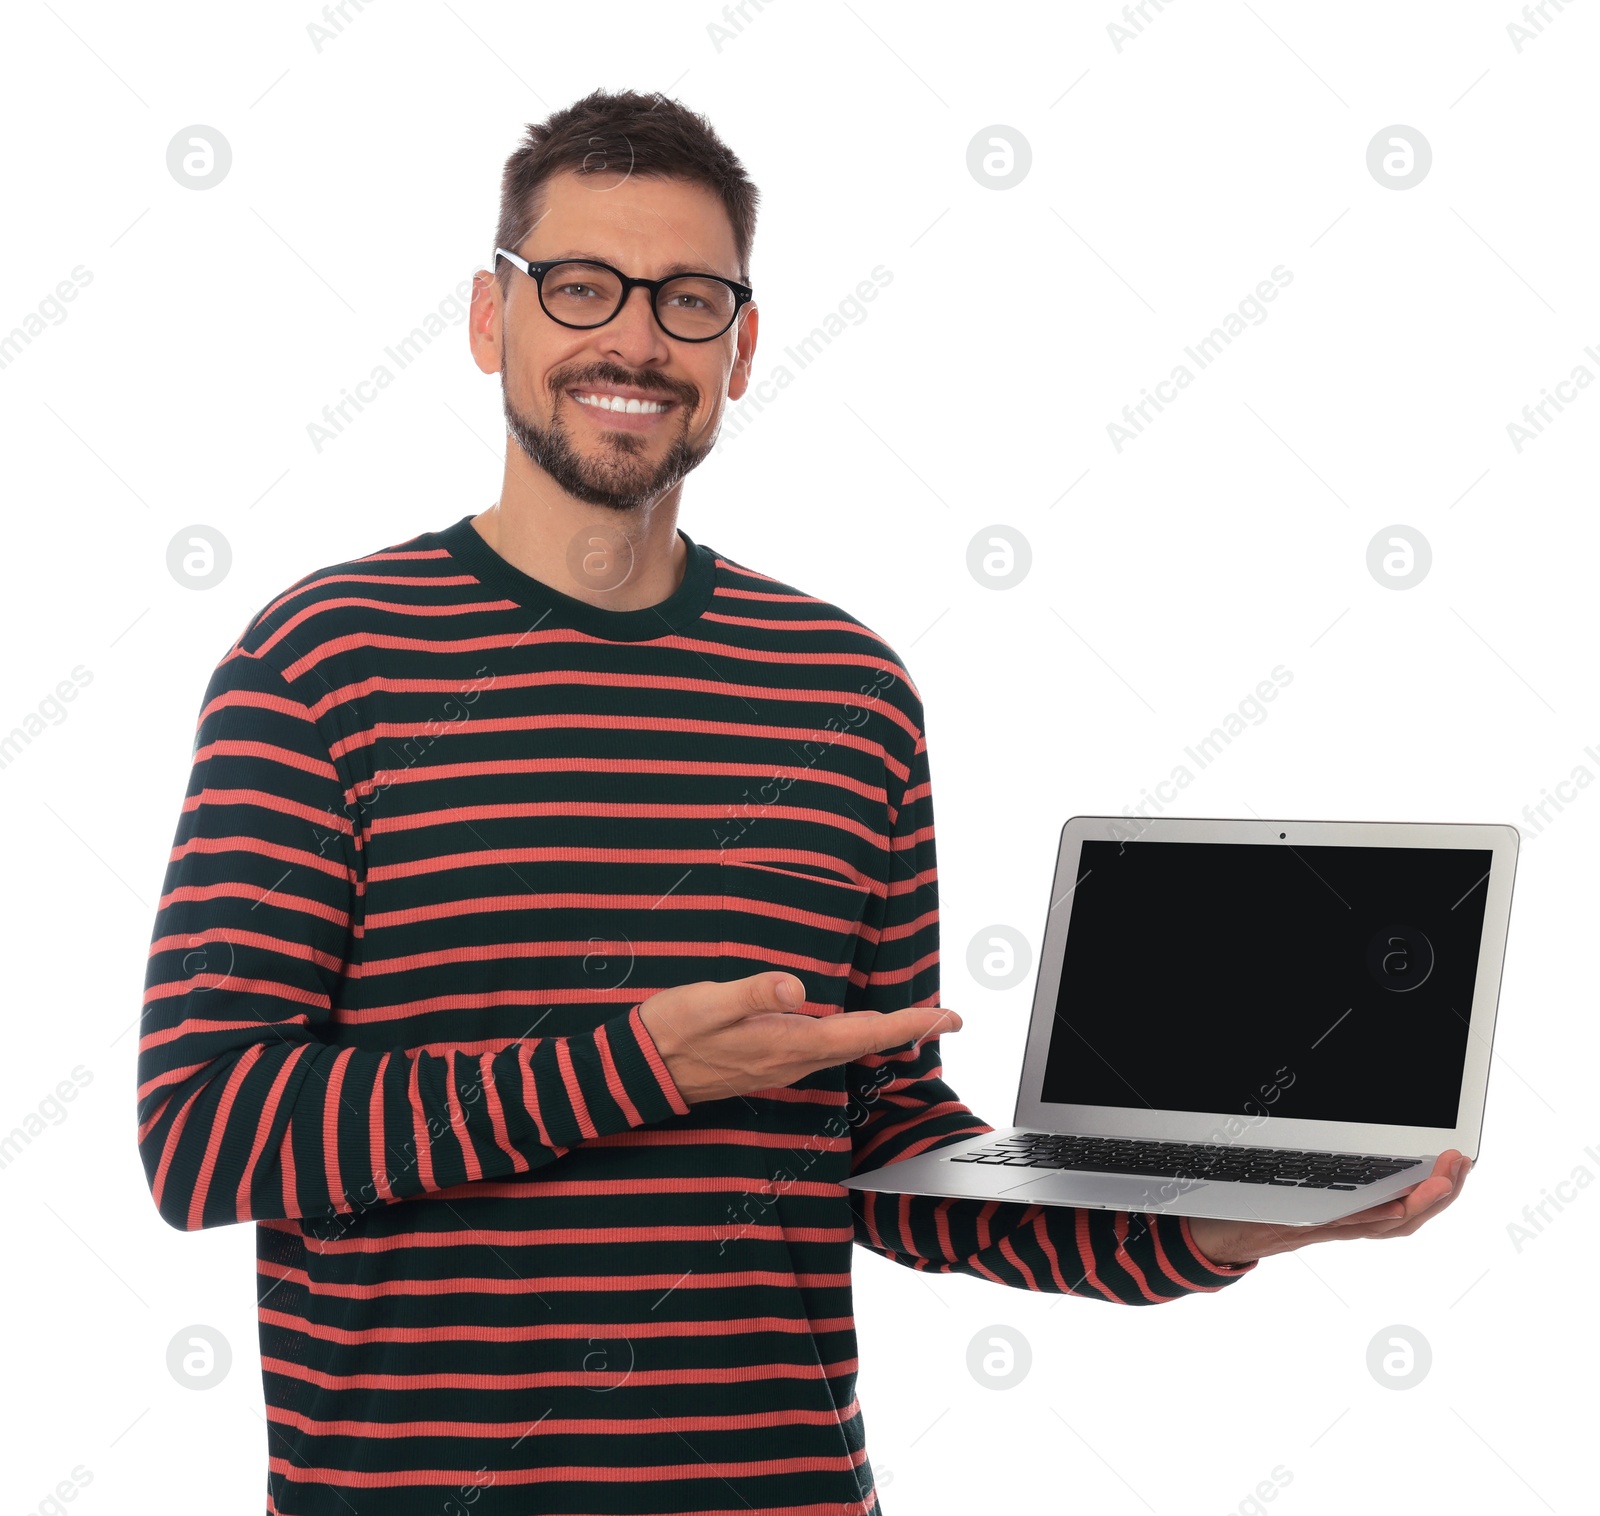 Photo of Smiling man showing laptop on white background